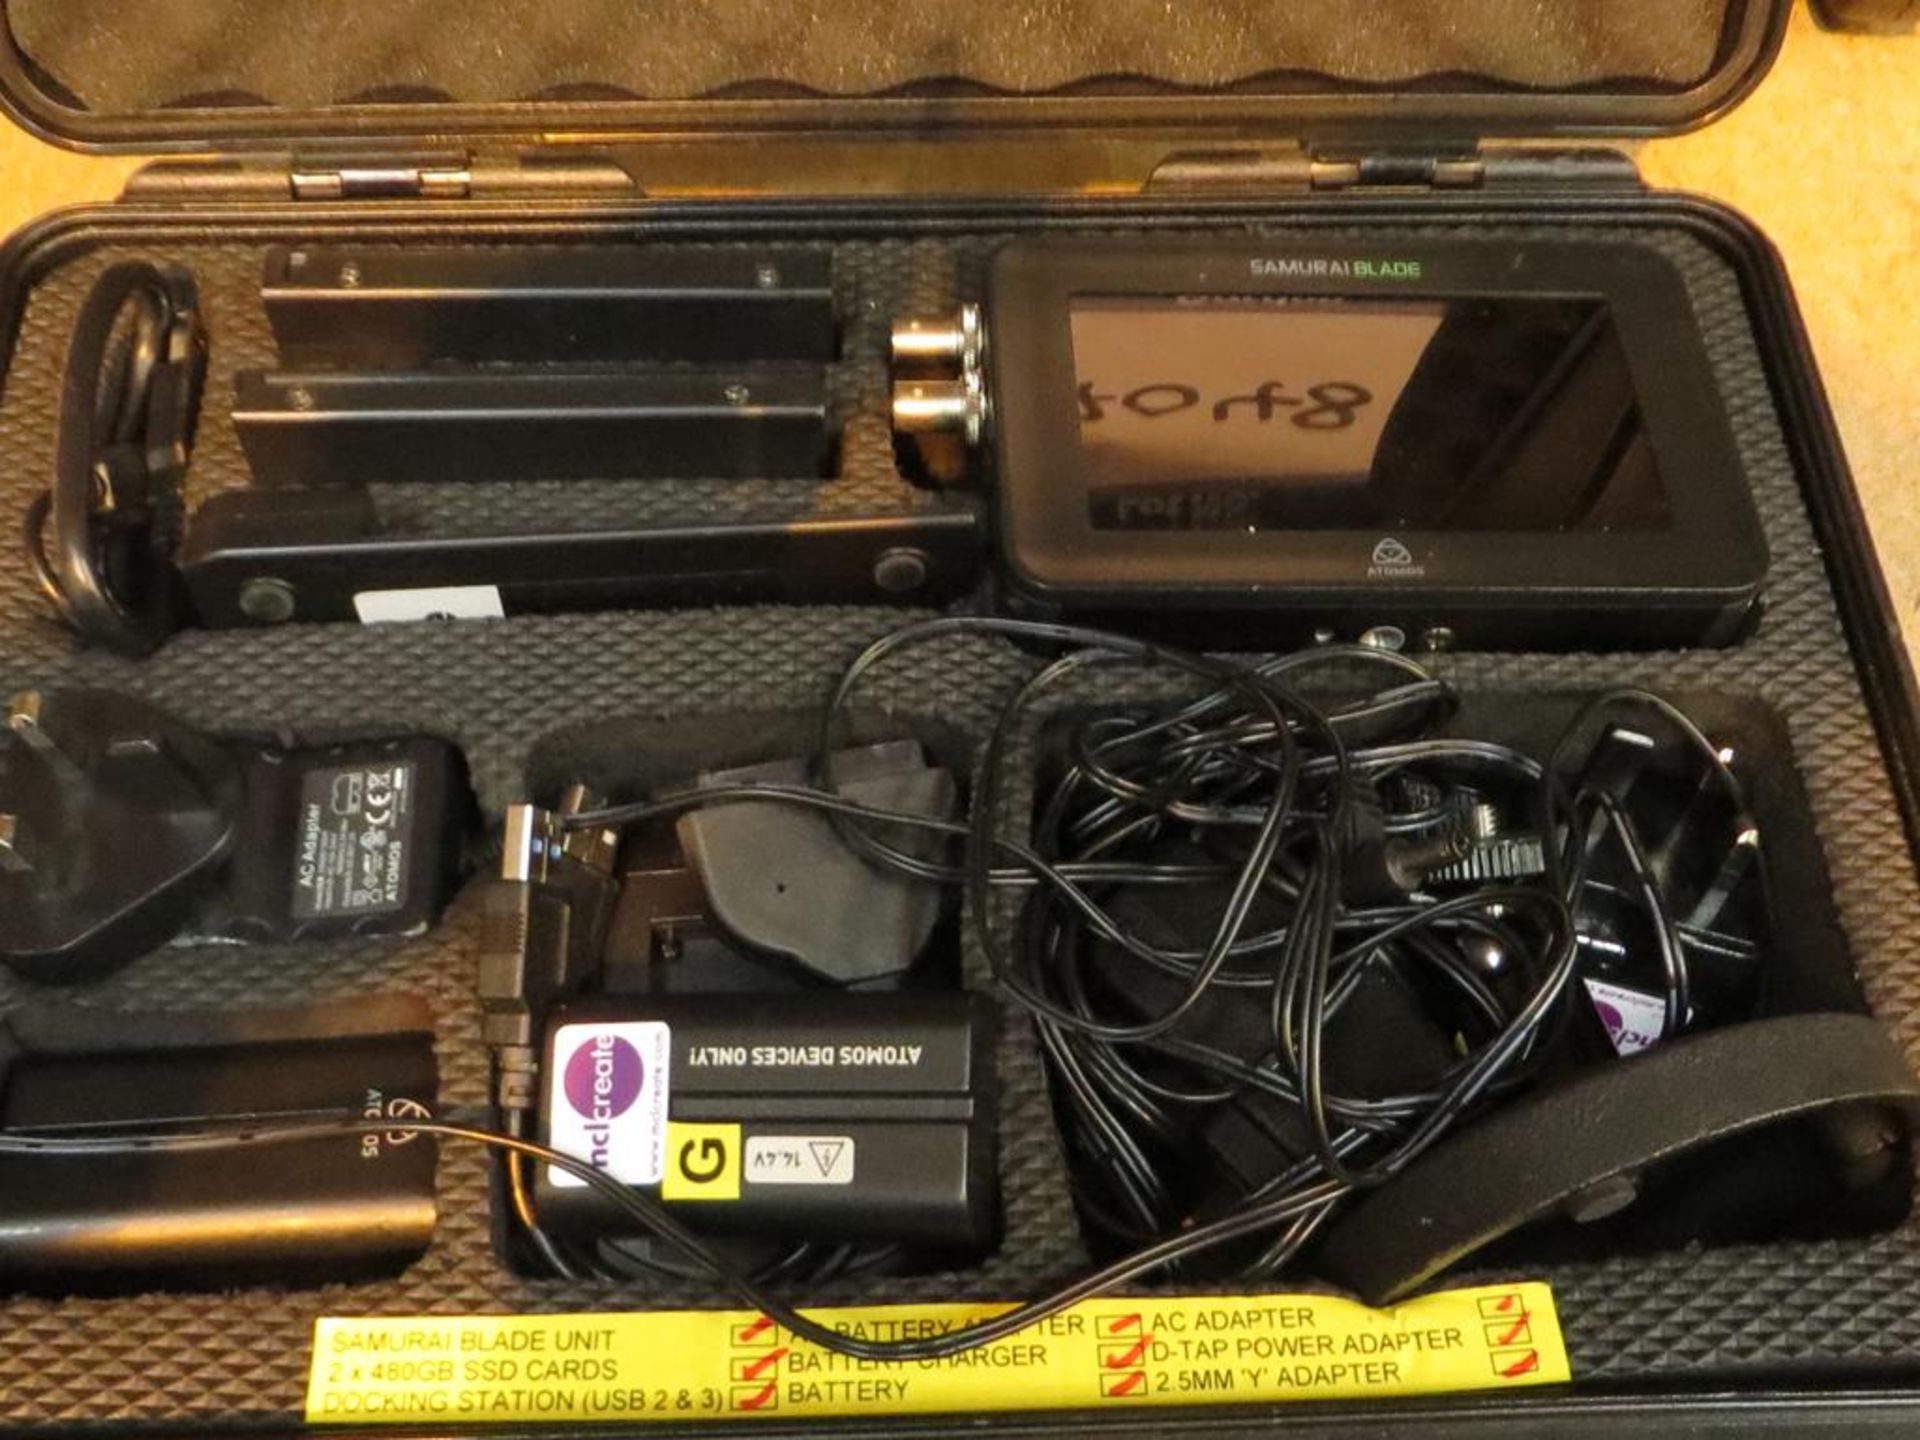 Atamos, Samurai Blade SSD recorder, Serial No. 85RW64SMB51E38 in transit case: Unit C Moorside, 40 - Image 2 of 3